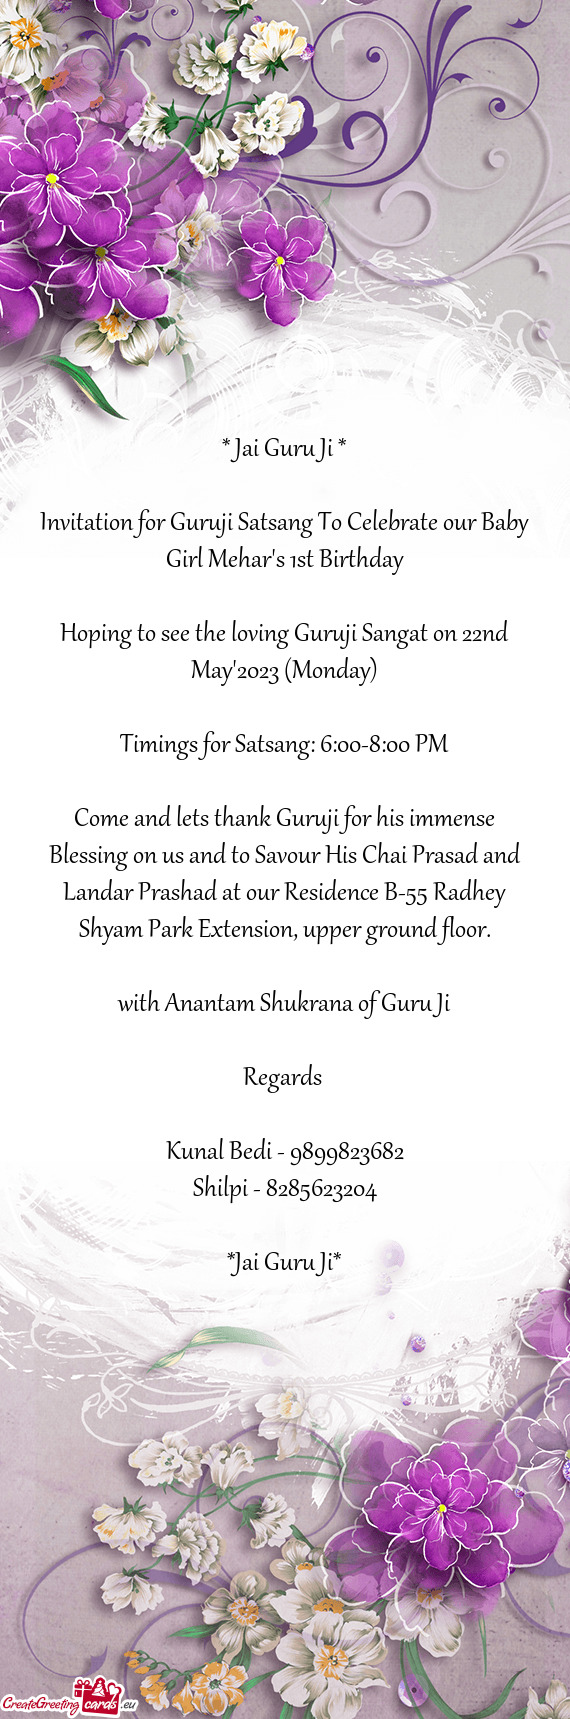 Invitation for Guruji Satsang To Celebrate our Baby Girl Mehar